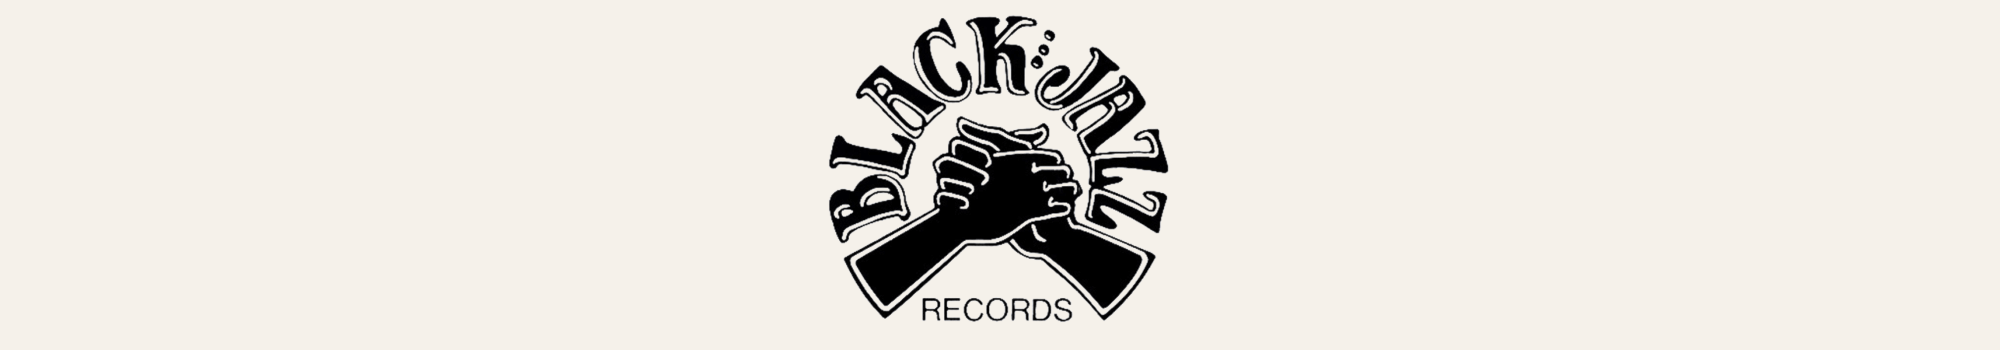 Black Jazz Records logo